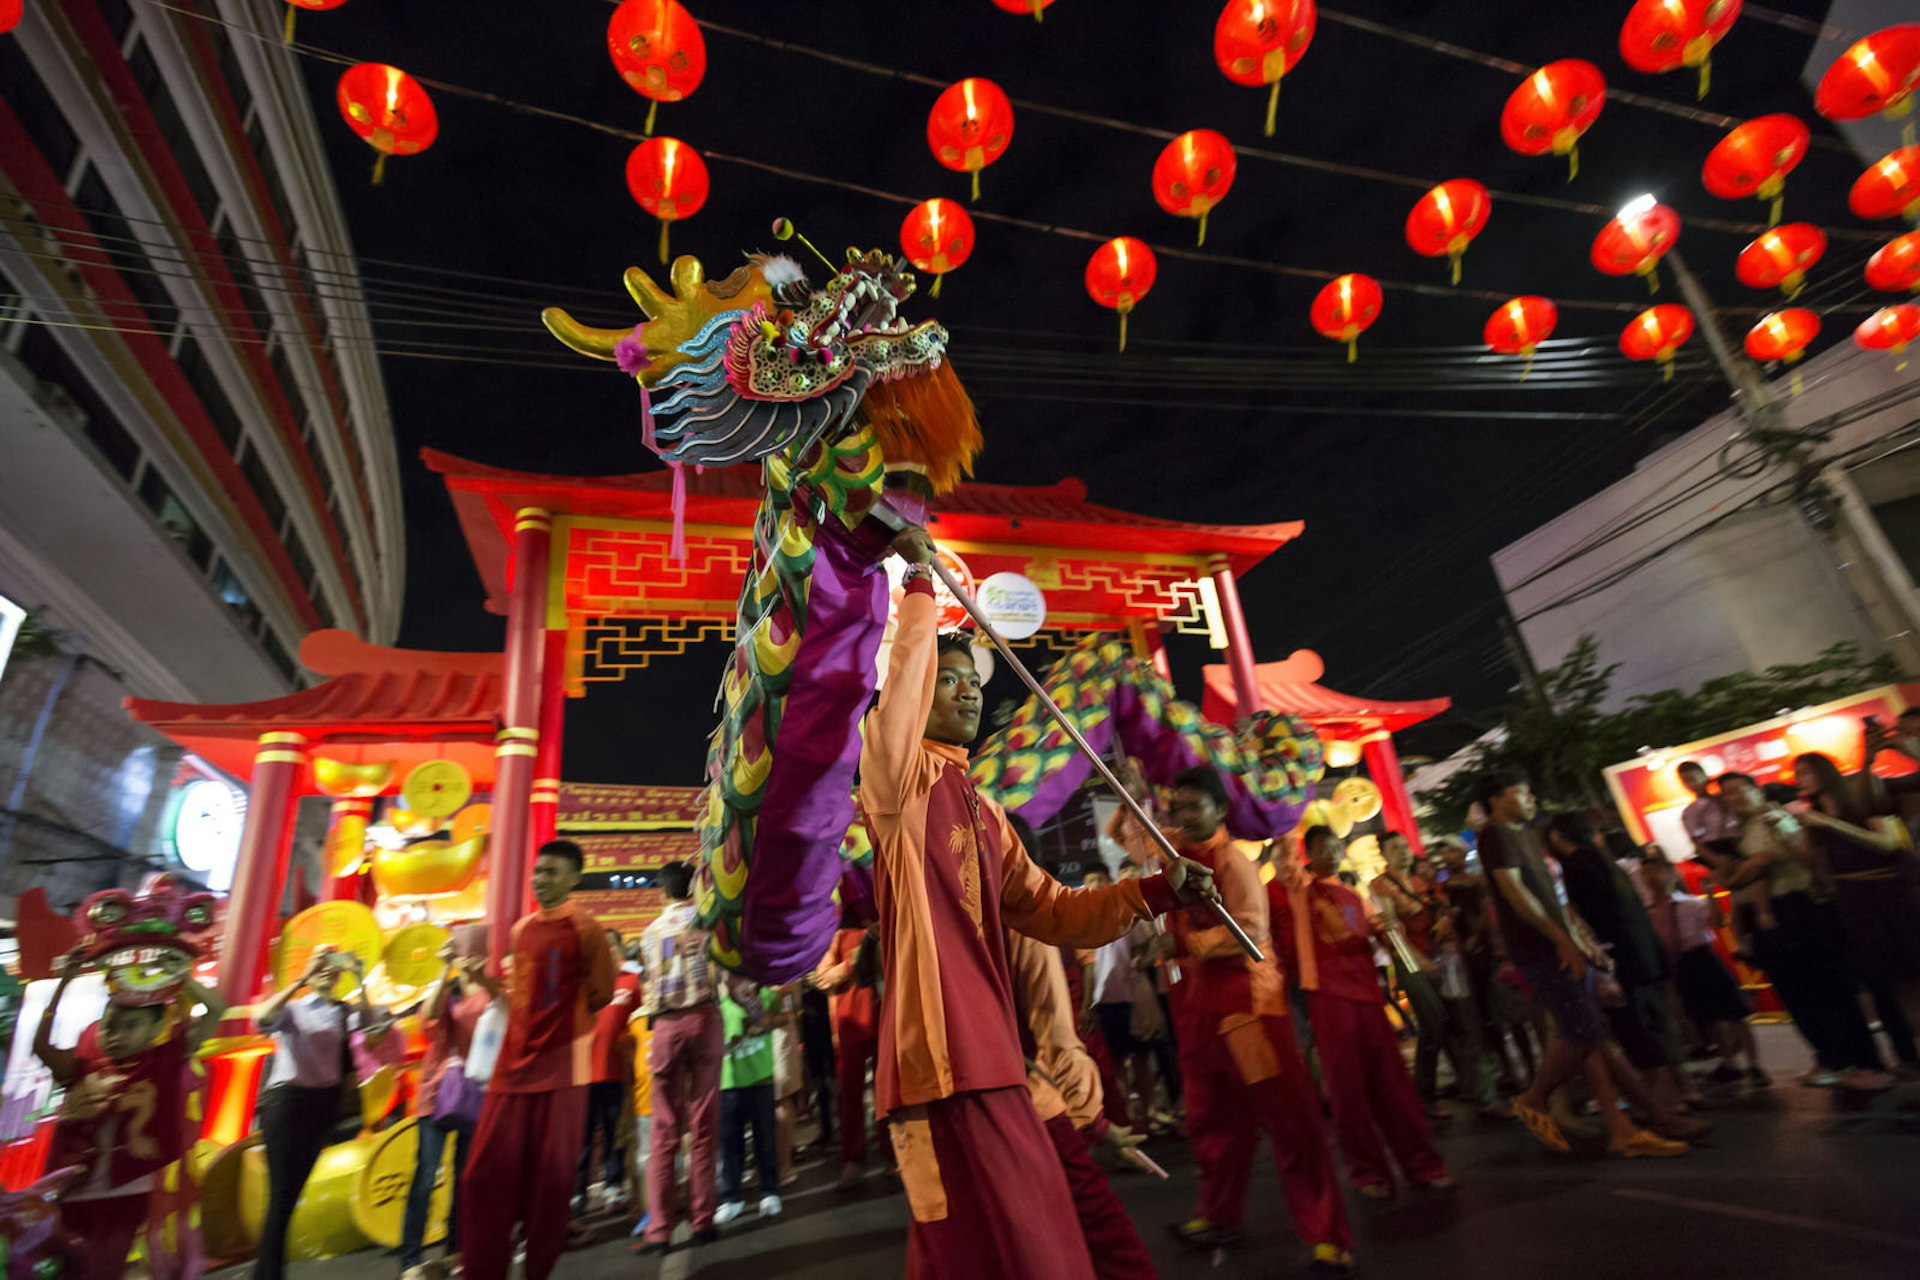 A dragon dance in Bangkok's buzzing Chinatown district